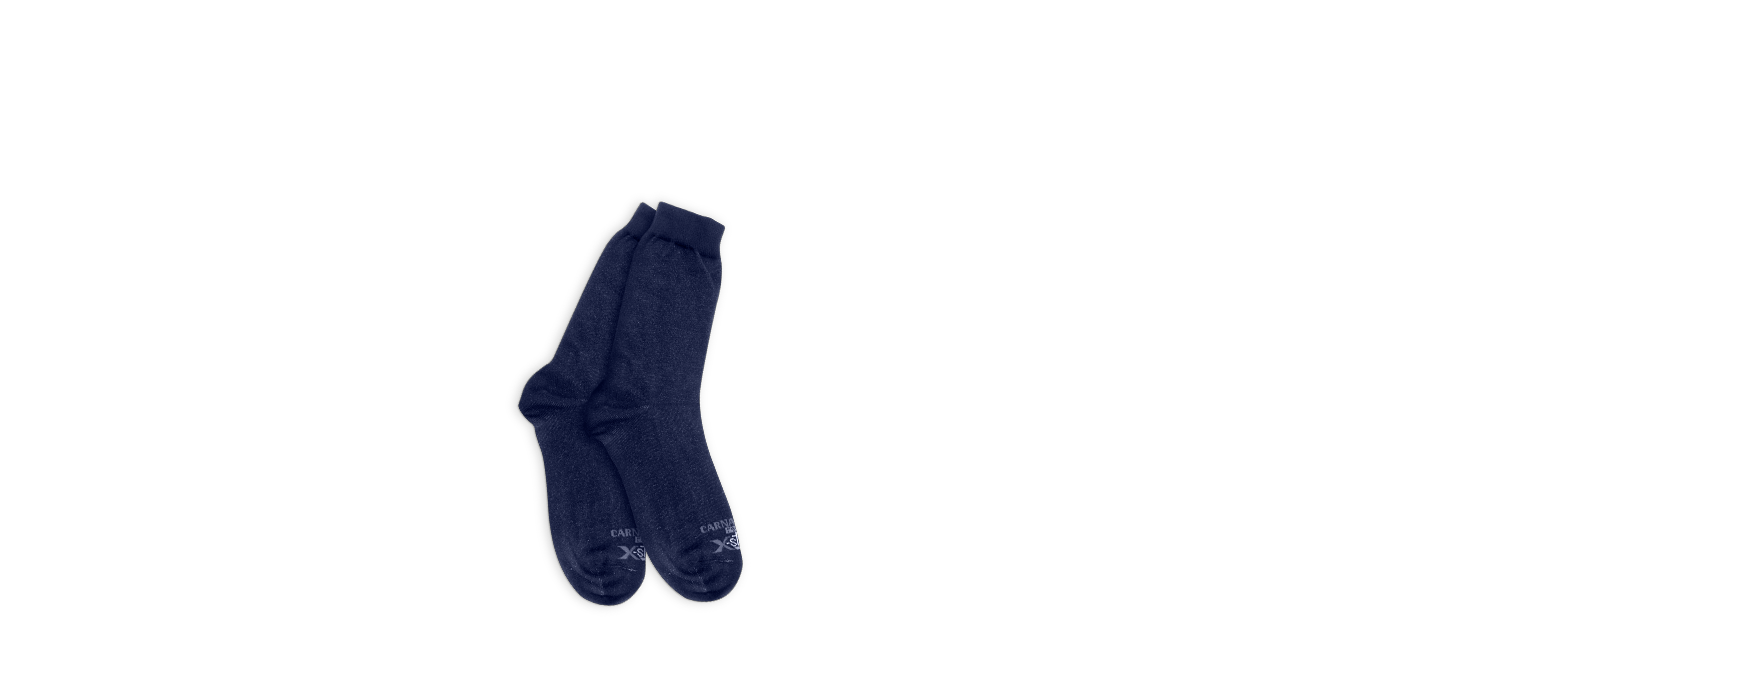 Blue Sock 1